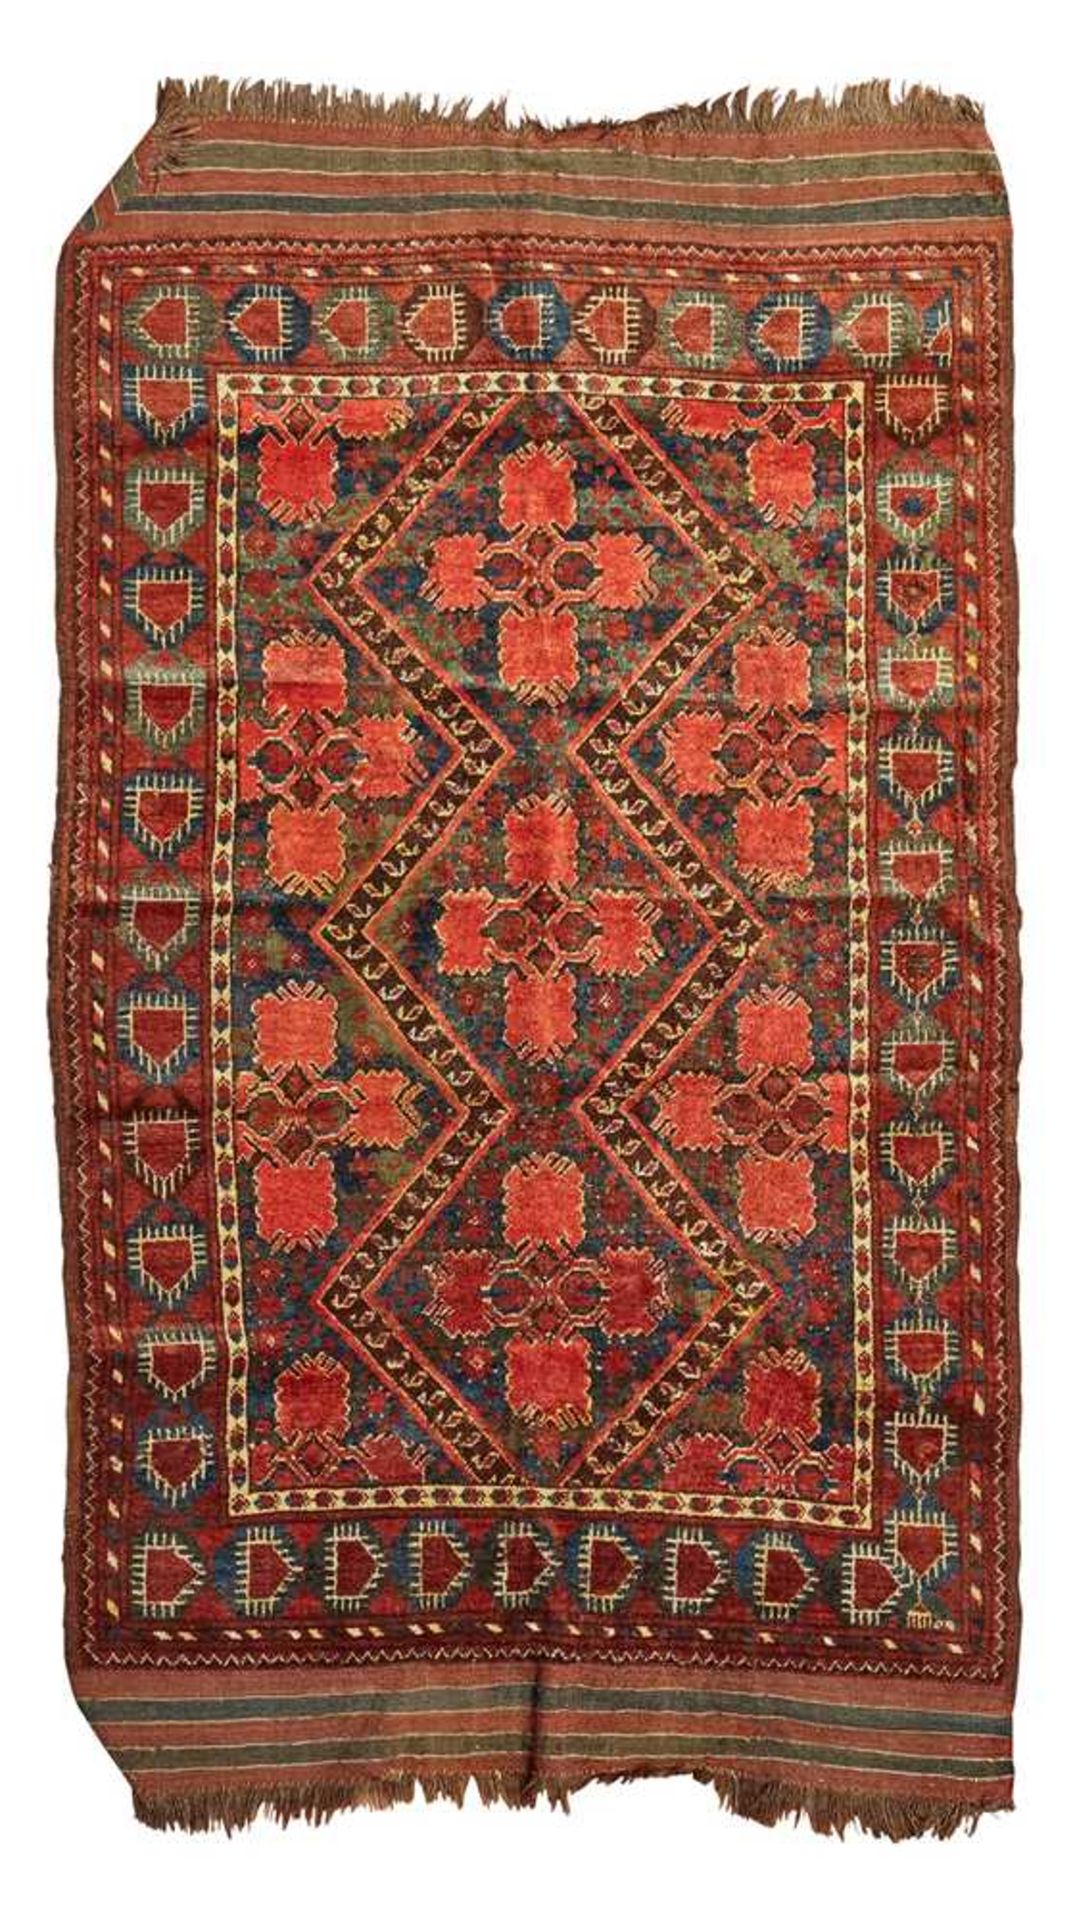 BESHIR CARPET TURKMENISTAN, LATE 19TH/EARLY 20TH CENTURY